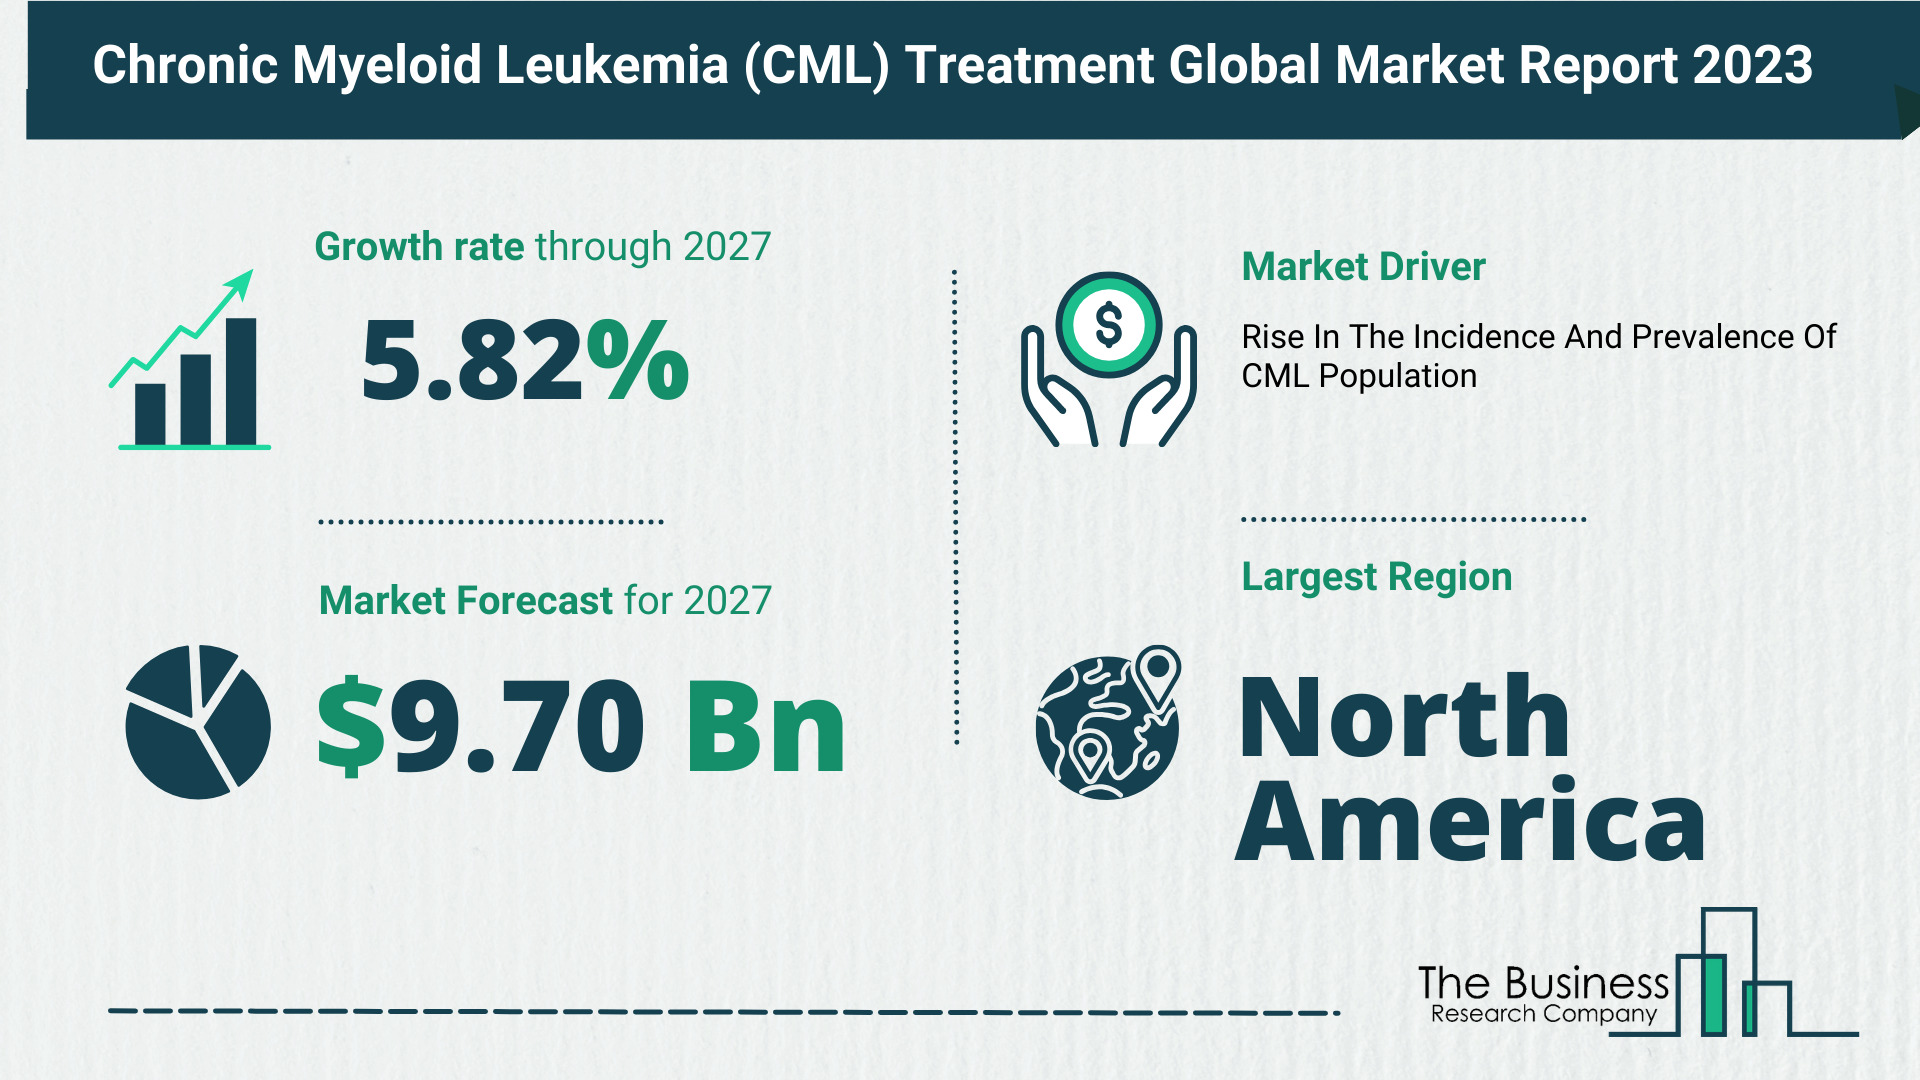 Chronic Myeloid Leukemia (CML) Treatment Market Size